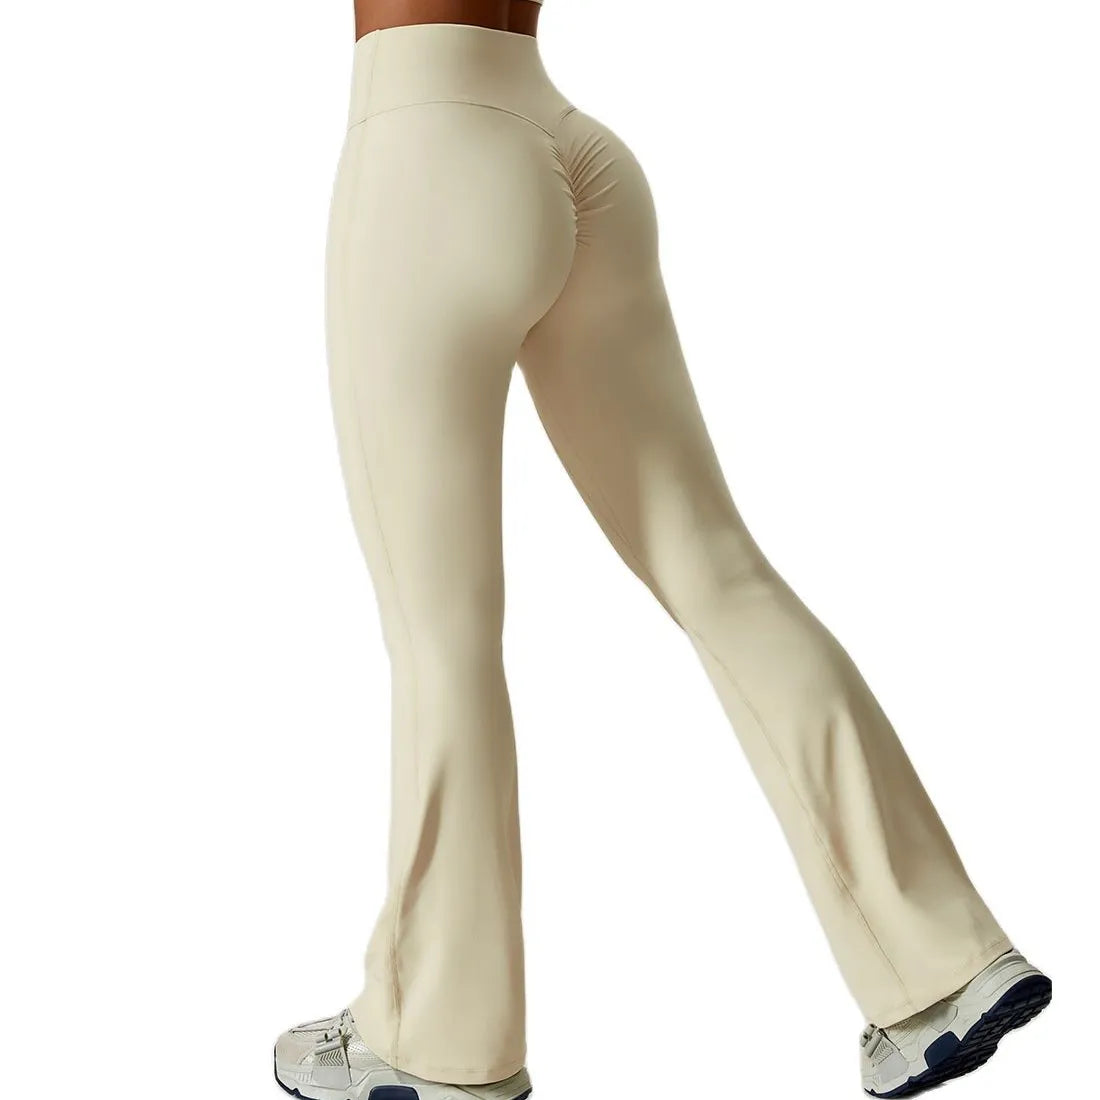 Women Yoga Bell-bottoms Tight Scrunch Butt Lifting Dance High Waist Tights Sport Pants Gym Running Breathable Fitness Leggings